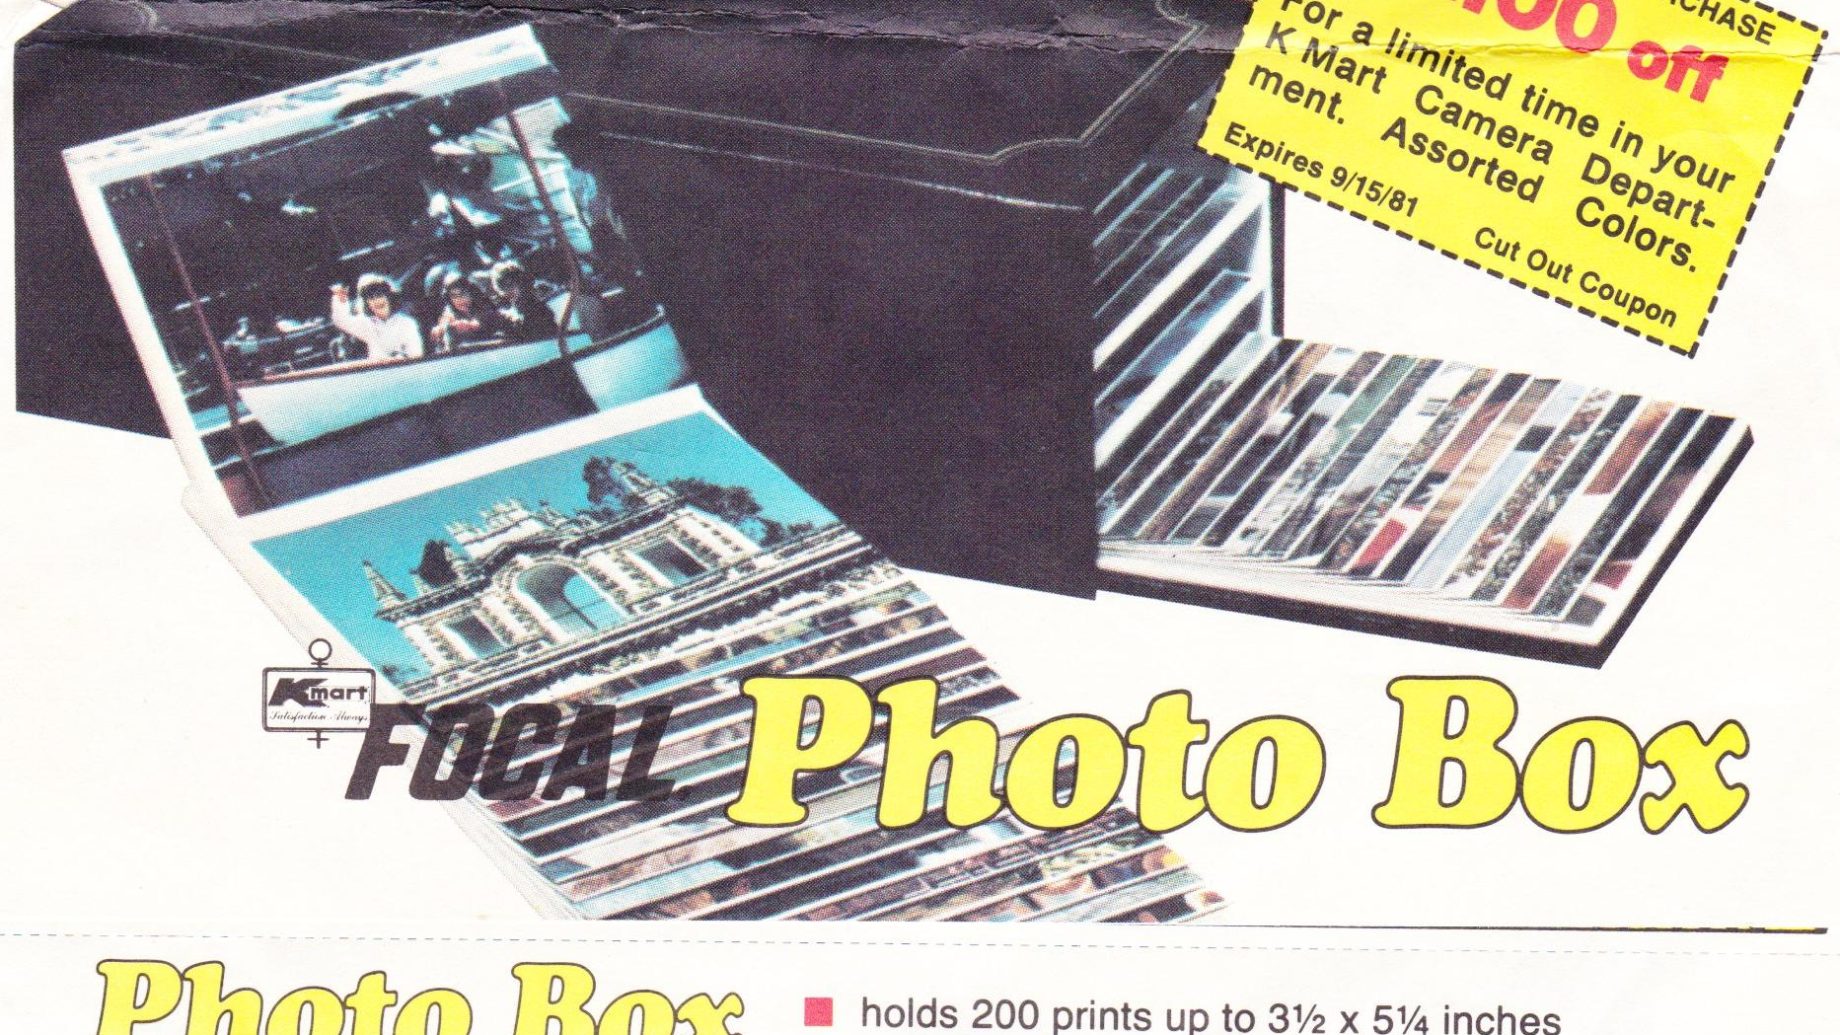 Kmart Focal Photo Box, 1981